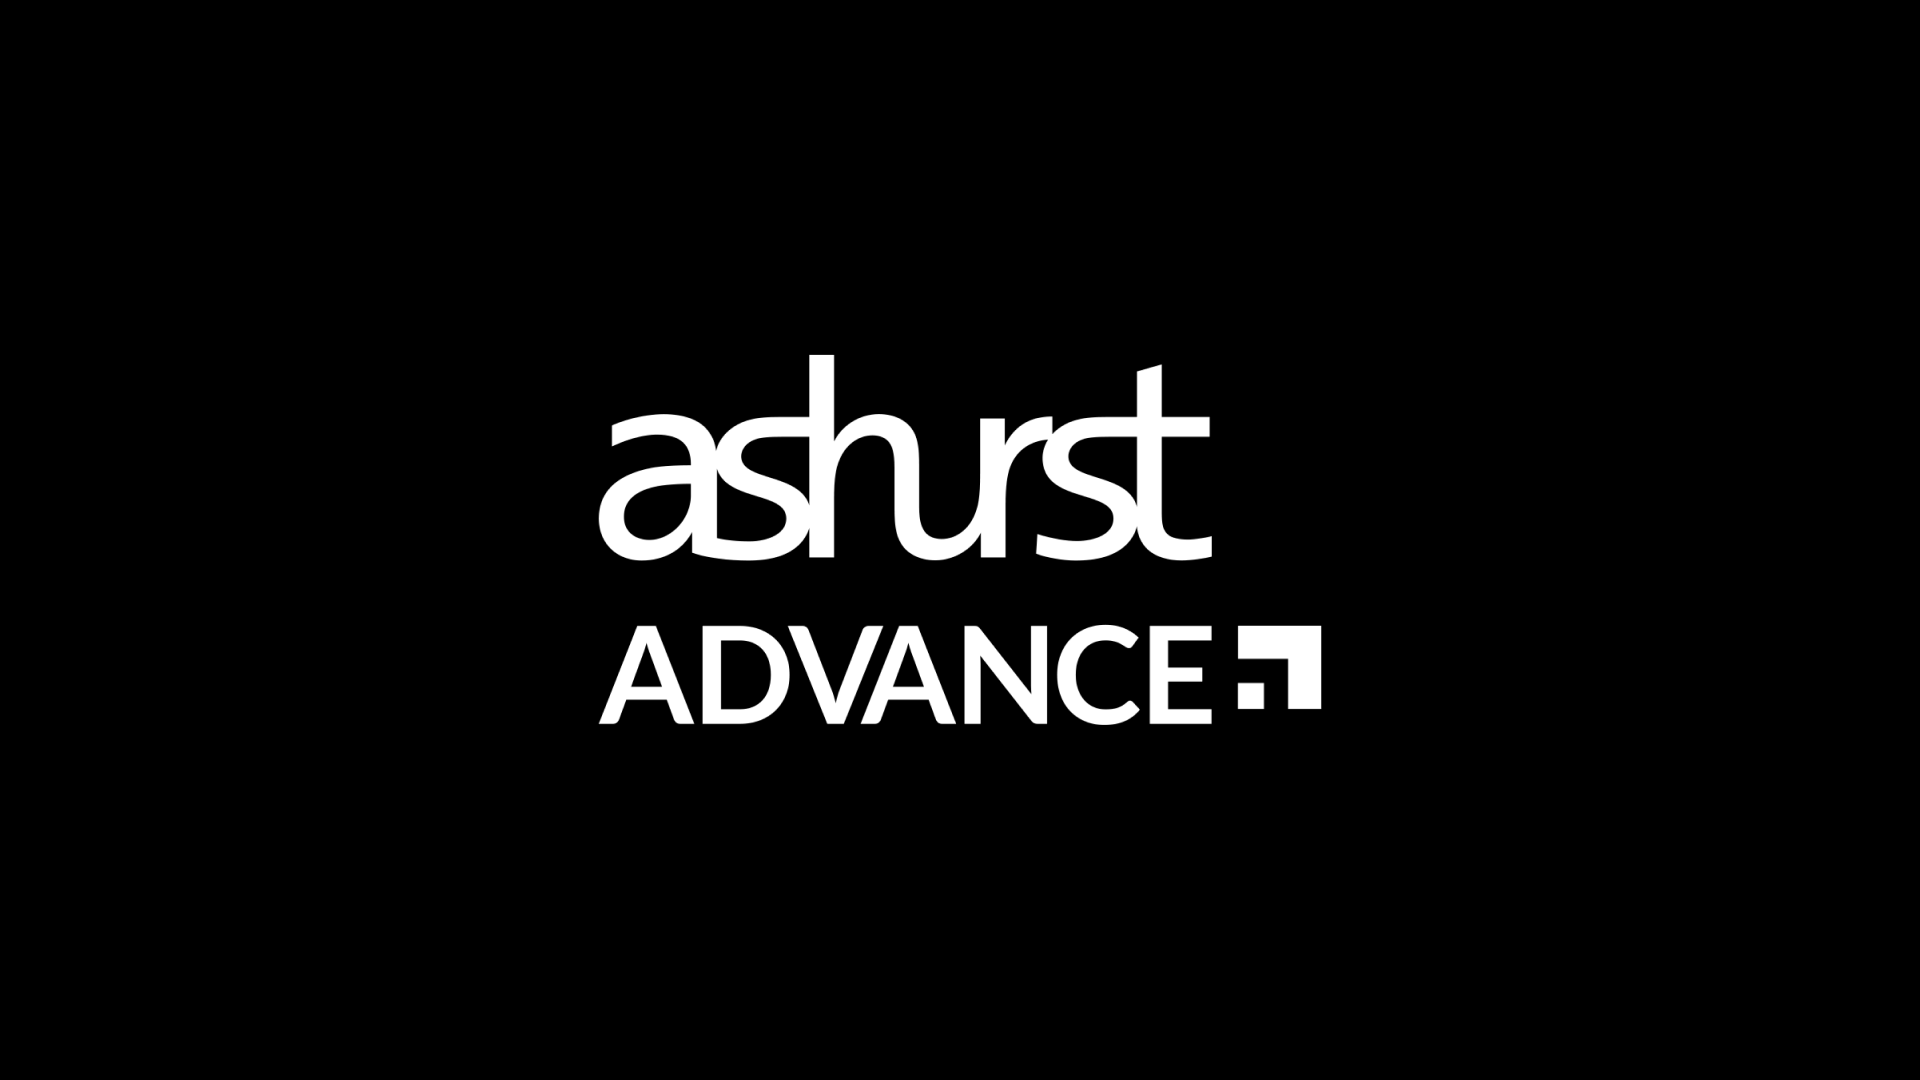 accurst advance logo